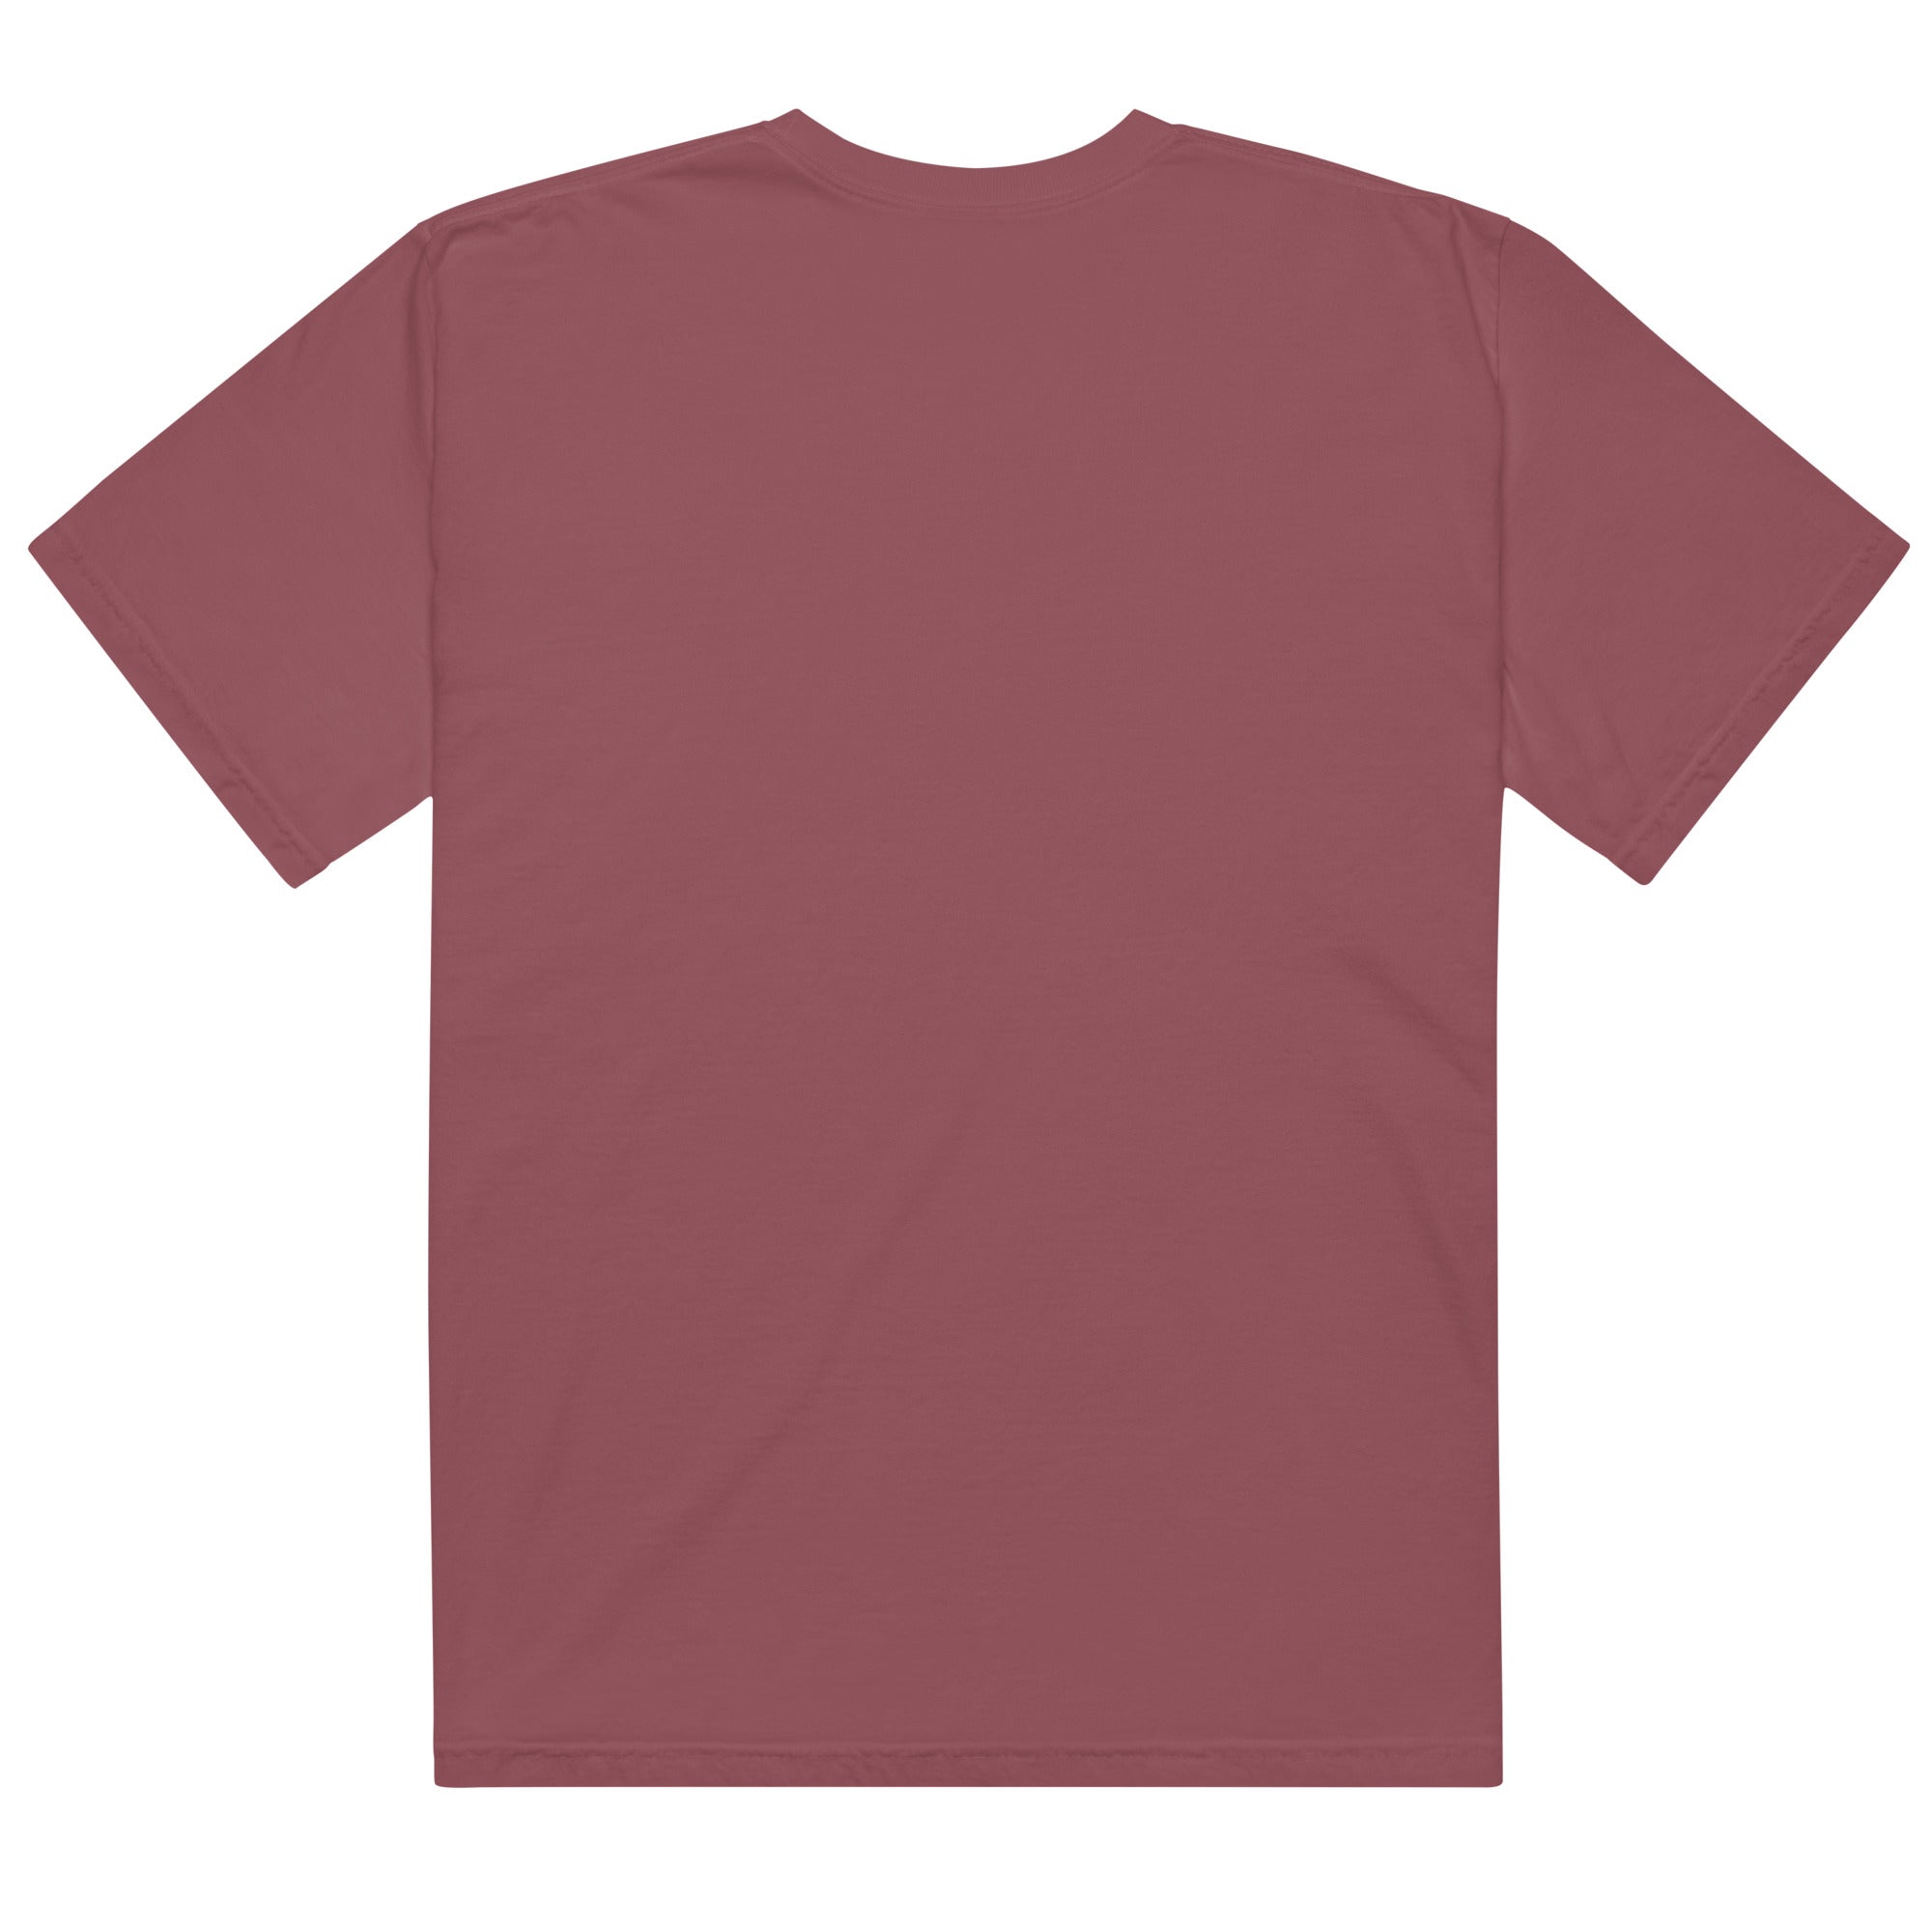 Mackey Mouse™, movie night- Mens garment-dyed heavyweight t-shirt